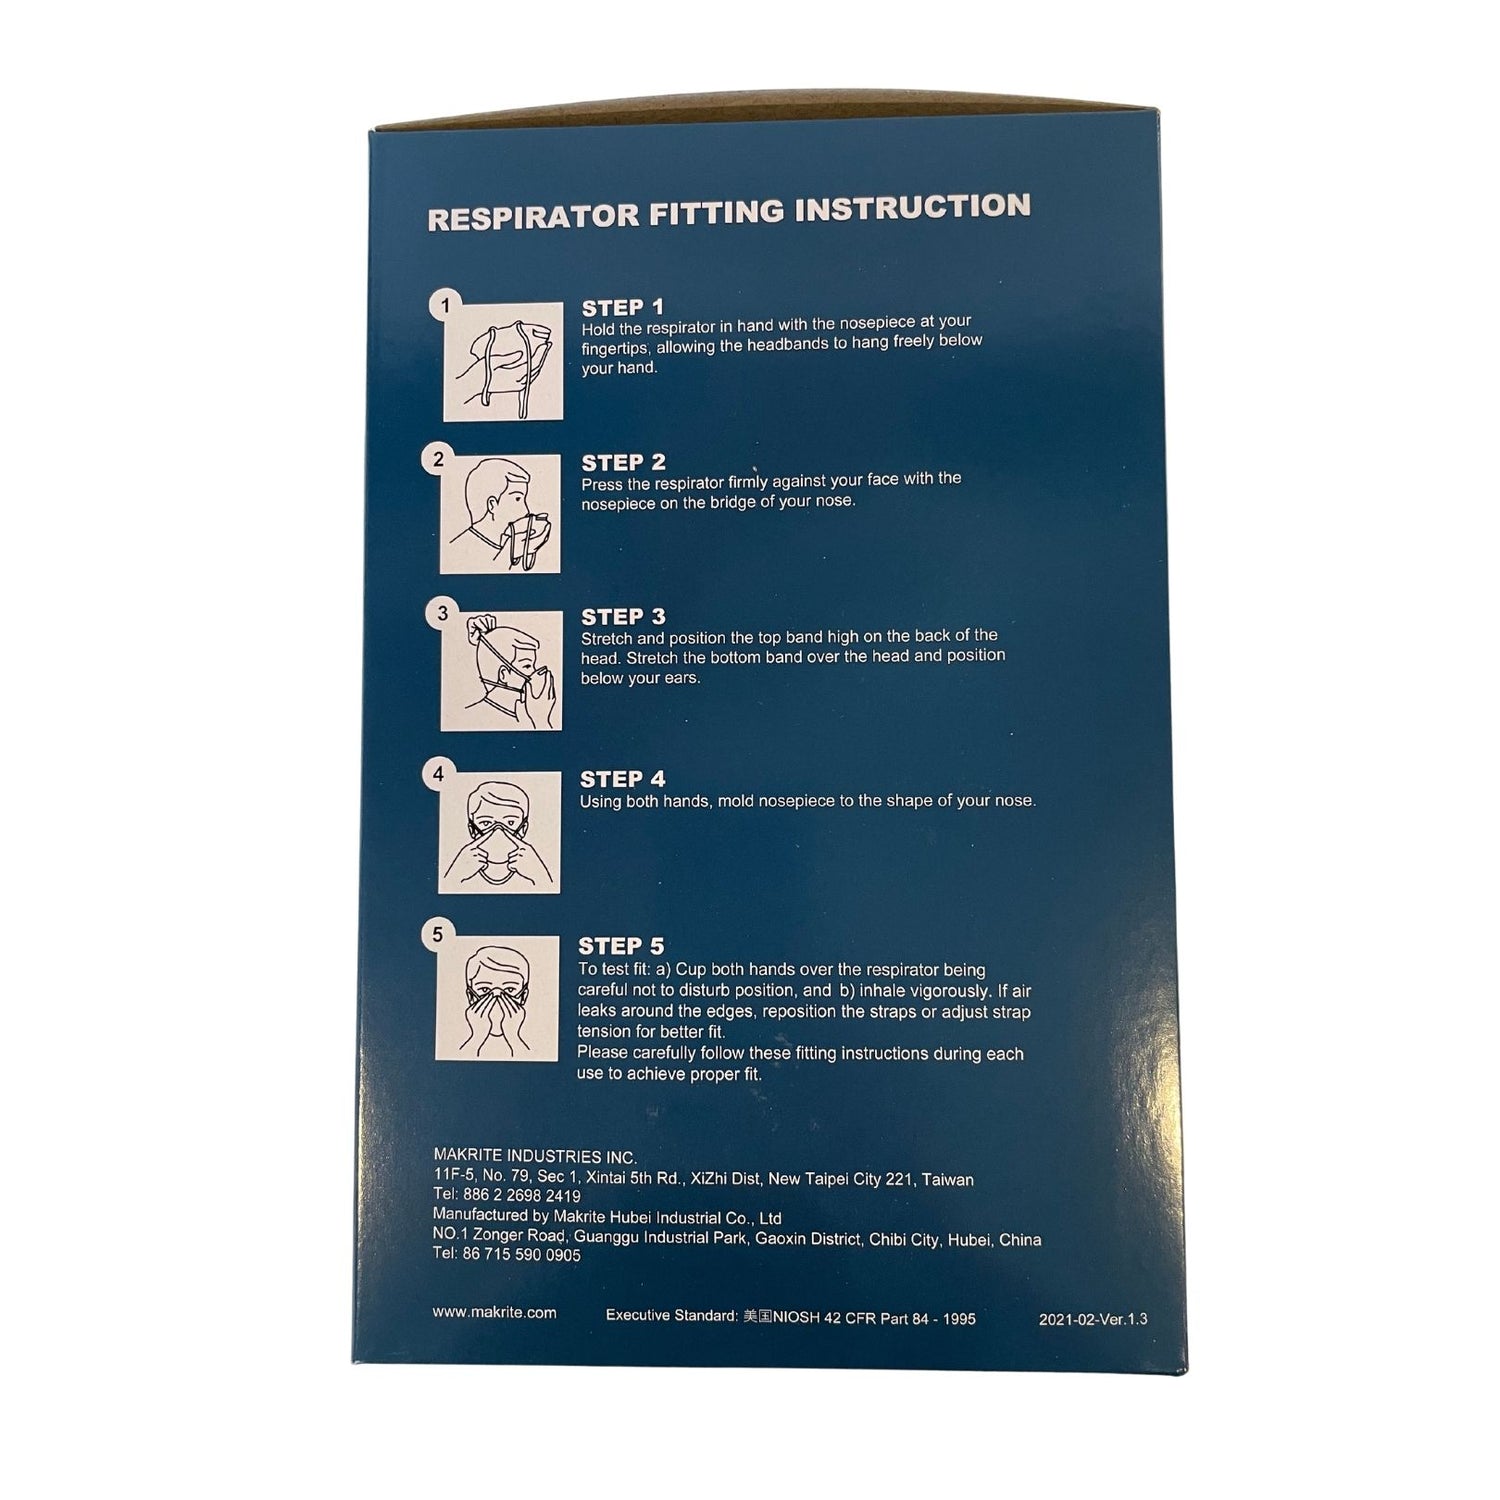 Mask 9500-N95 $1/PCS ( $19.99/Box (20 Pcs/Box) NIOSH Certified N95 Respirator - USA Medical Supply